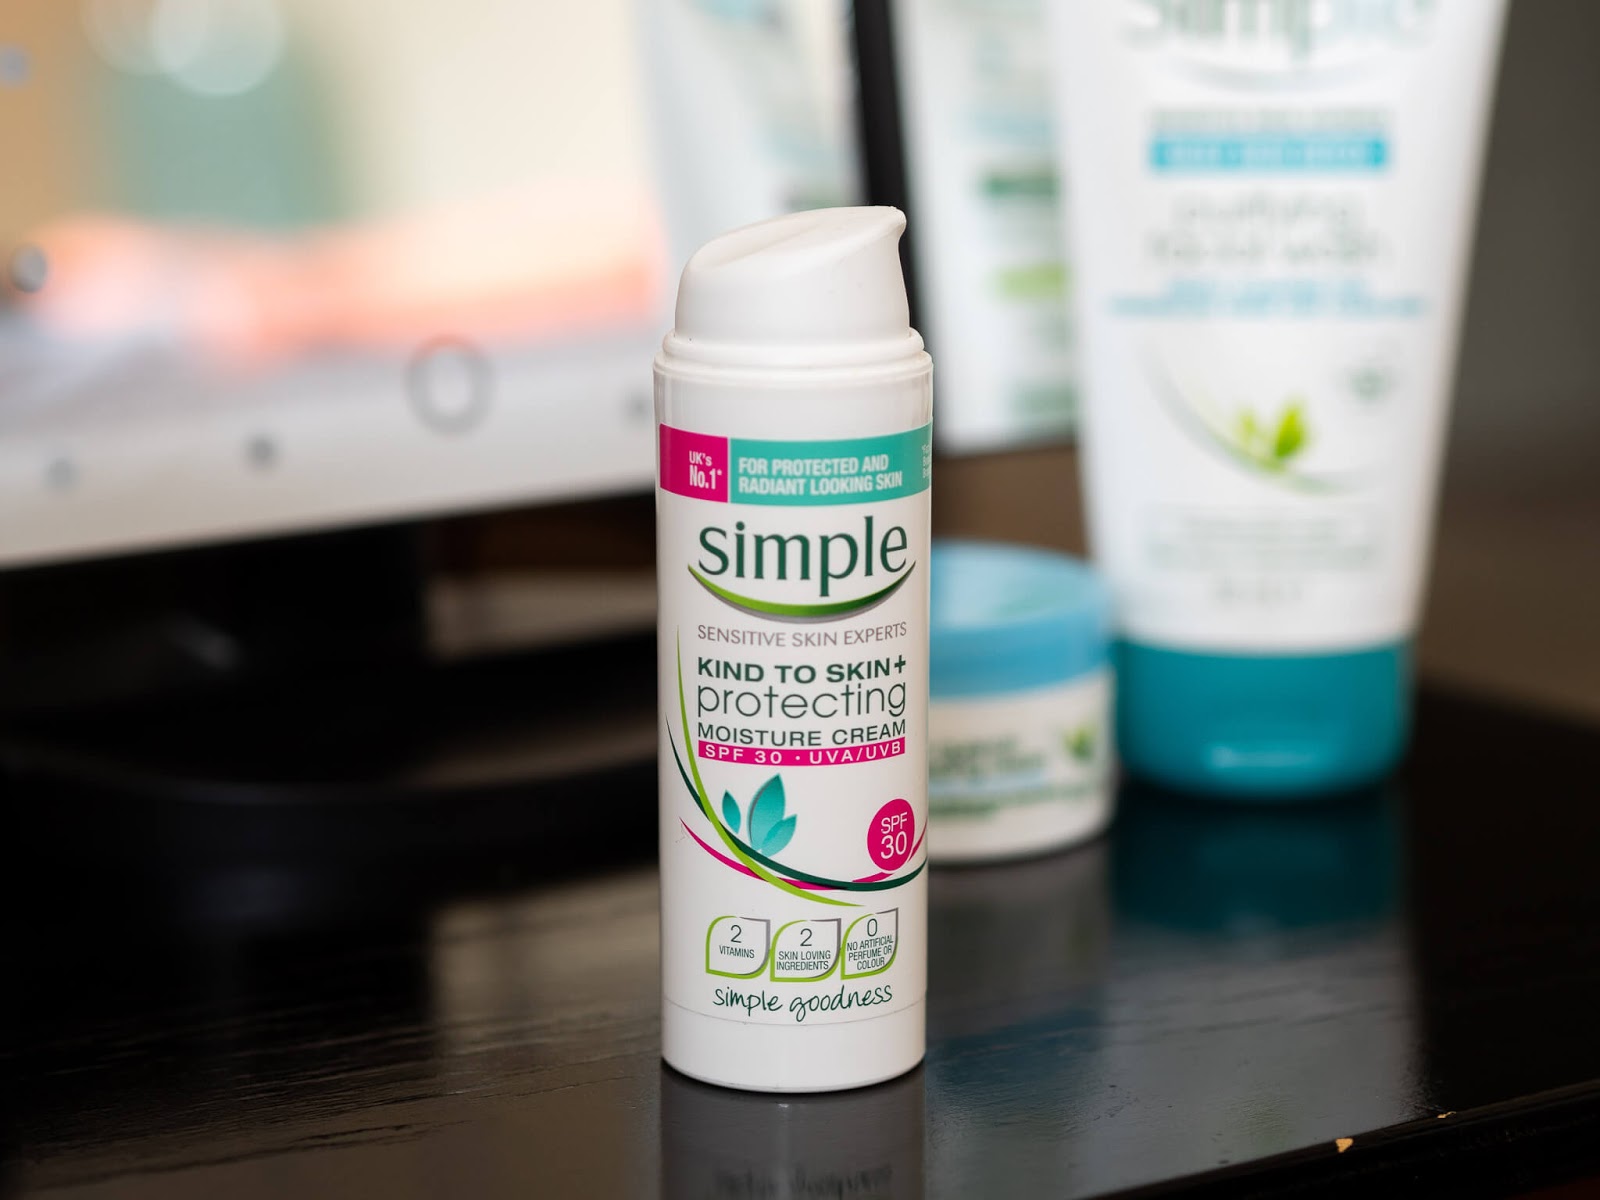 Simple's Kind To Skin+ Protecting moisturiser